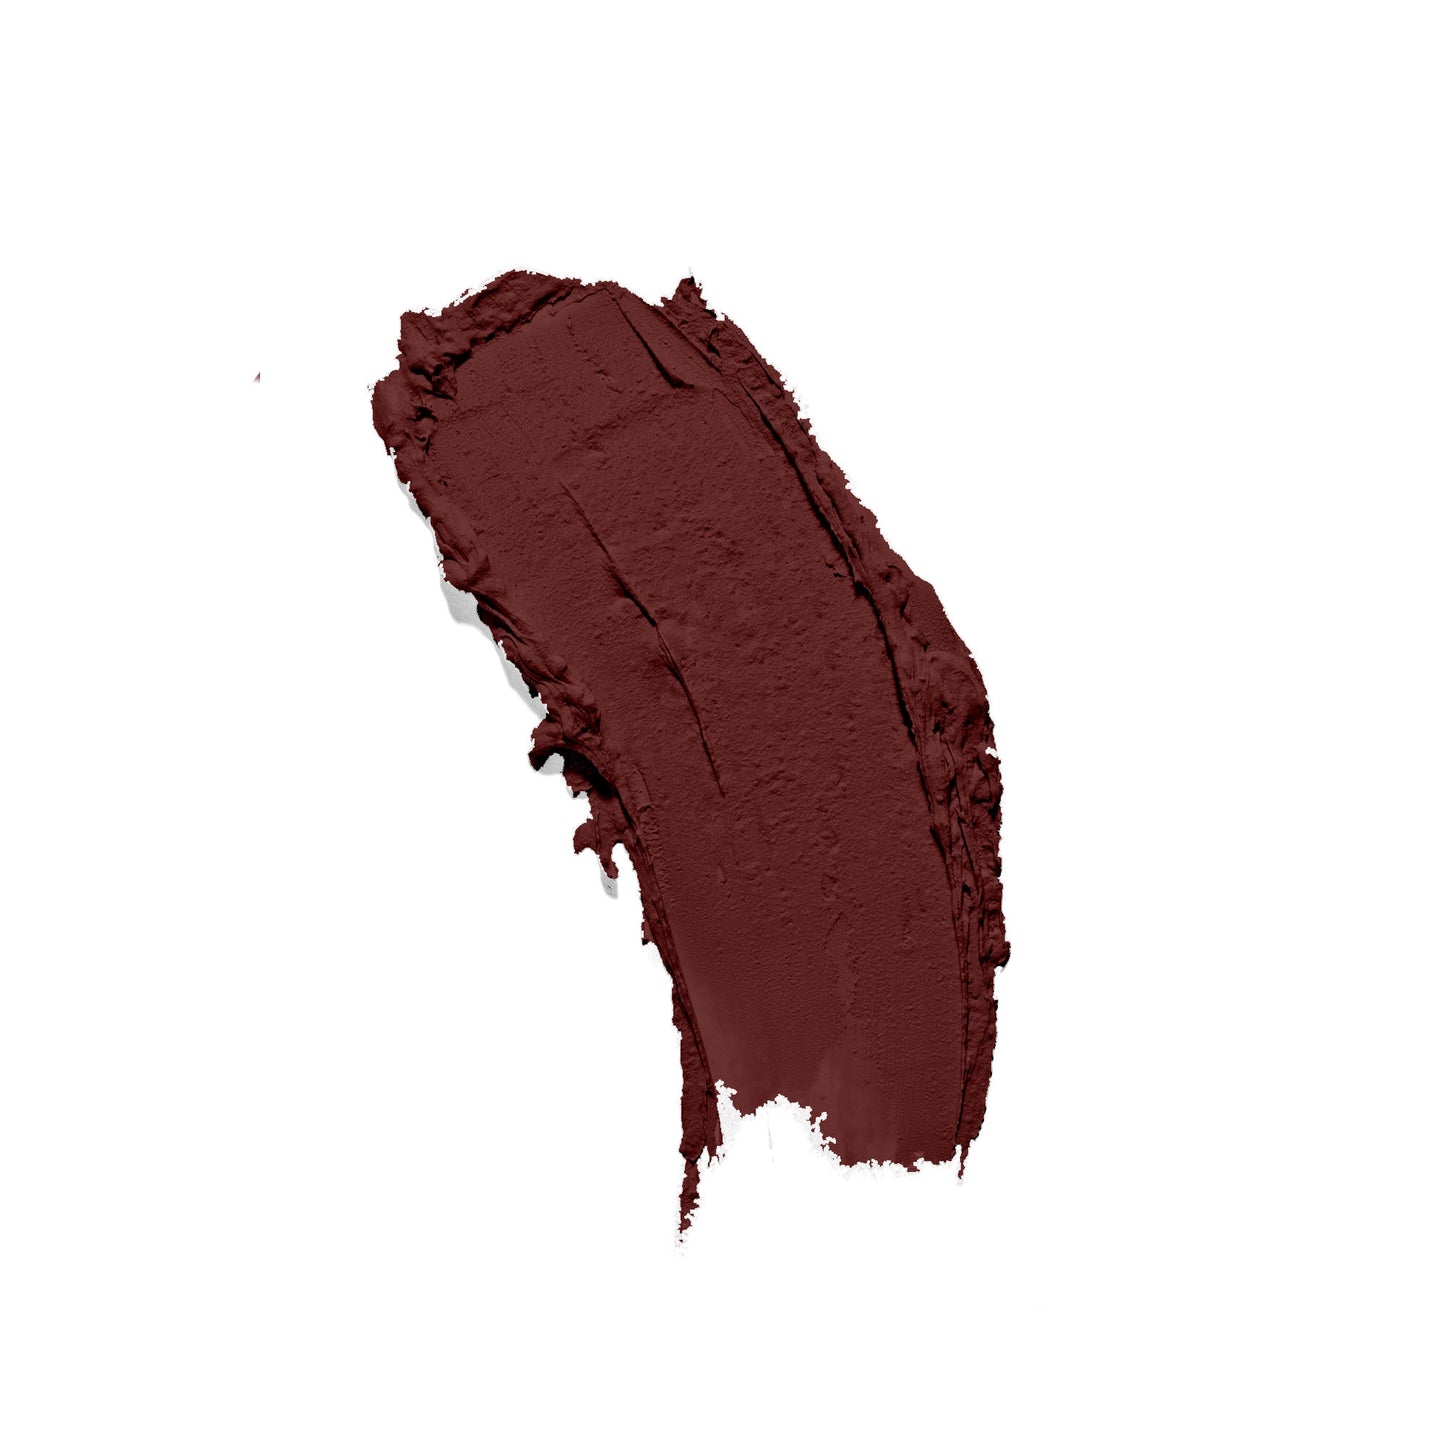 Next Essence 89% Chocolate Lipstick Makeup Swatch